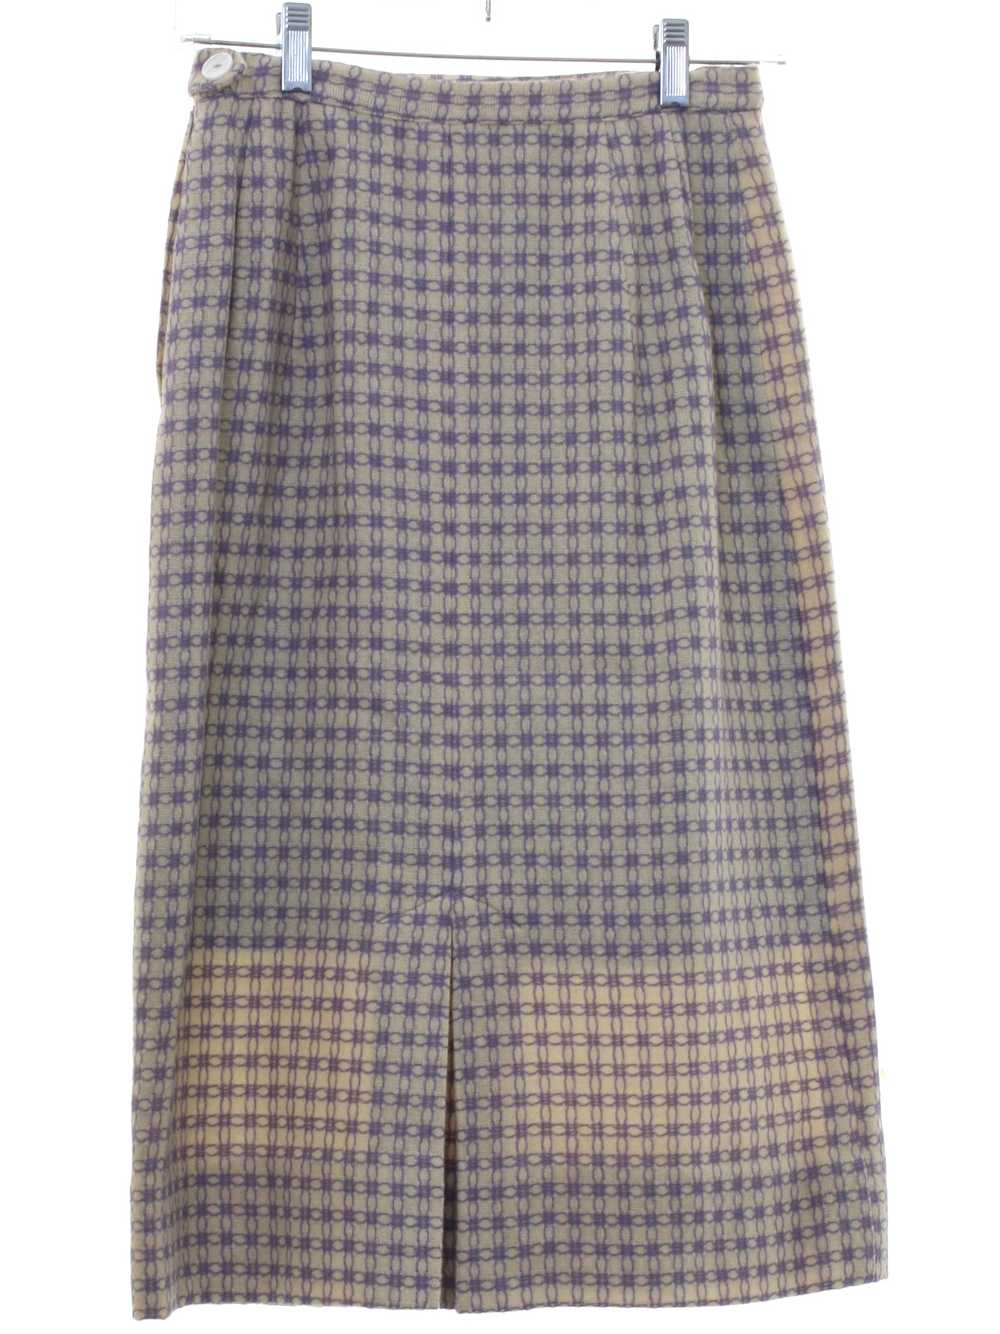 1960's Columbia Shirt Mod Wool Skirt - image 3